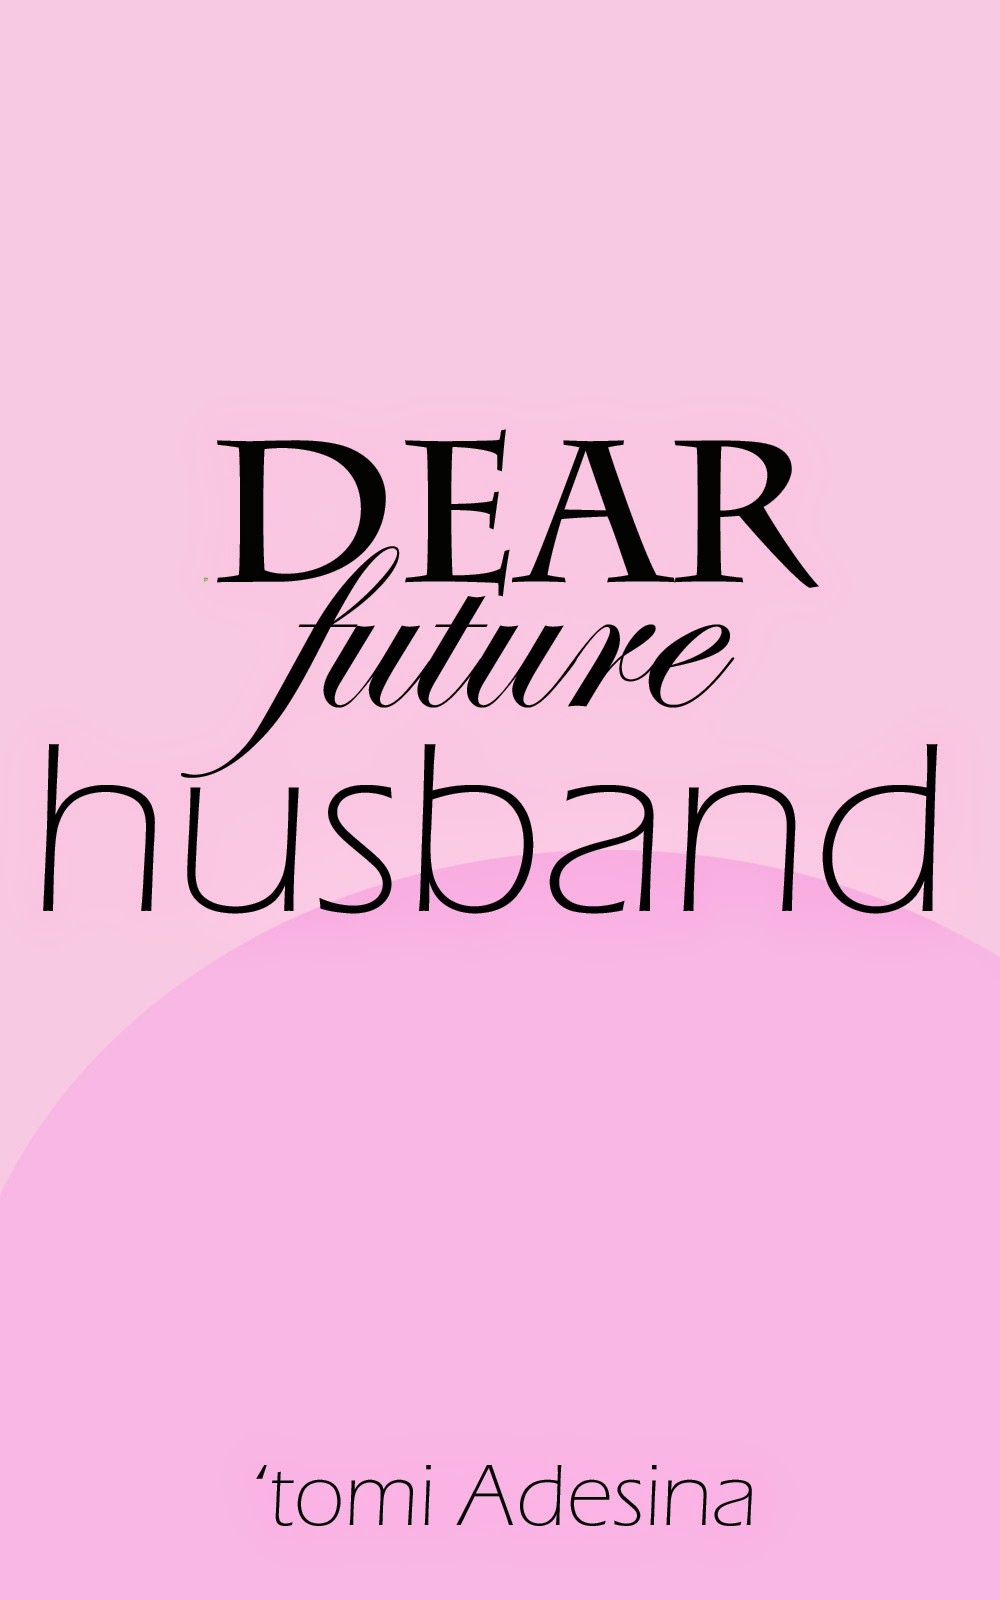 Dear husbands. Деар Фьючер Хасбенд. My Future husband. Dear Future husband. Dear Future husband на русском.